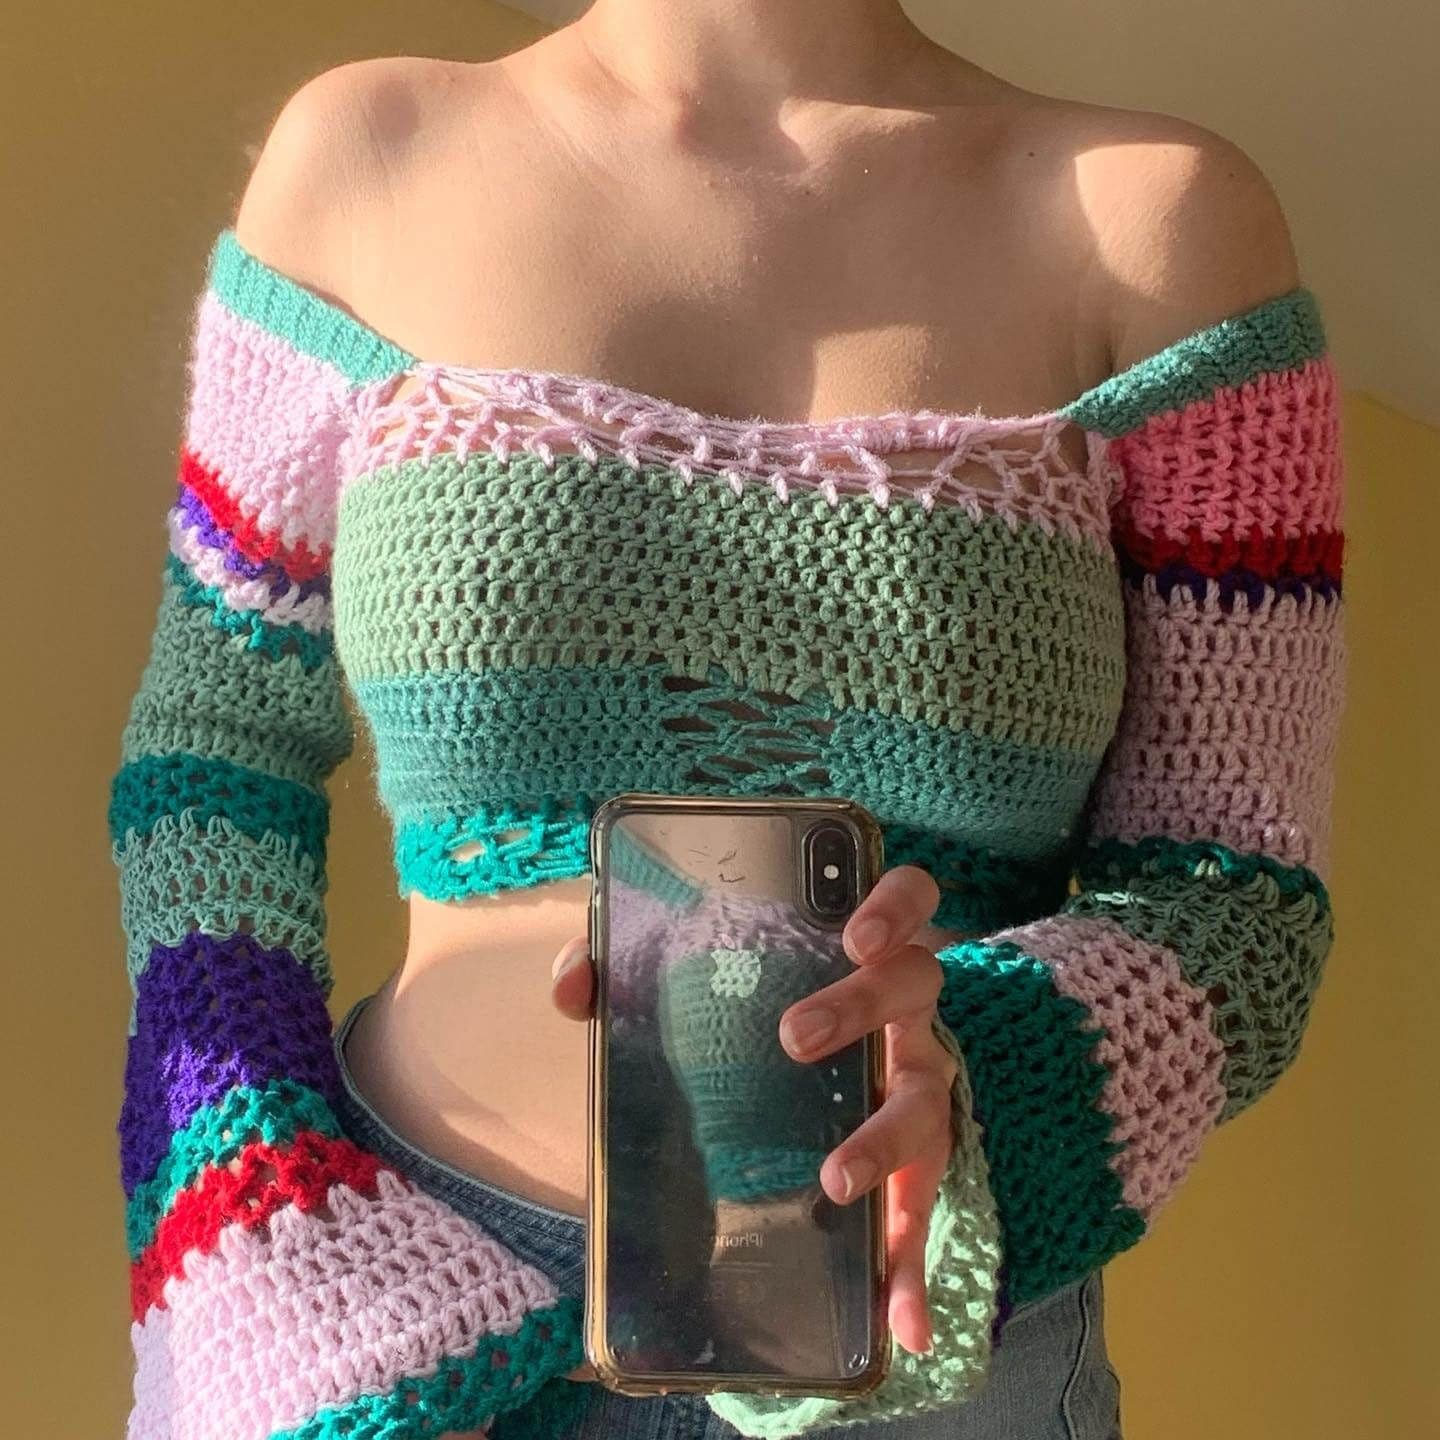 Crochet top long sleeve square neck